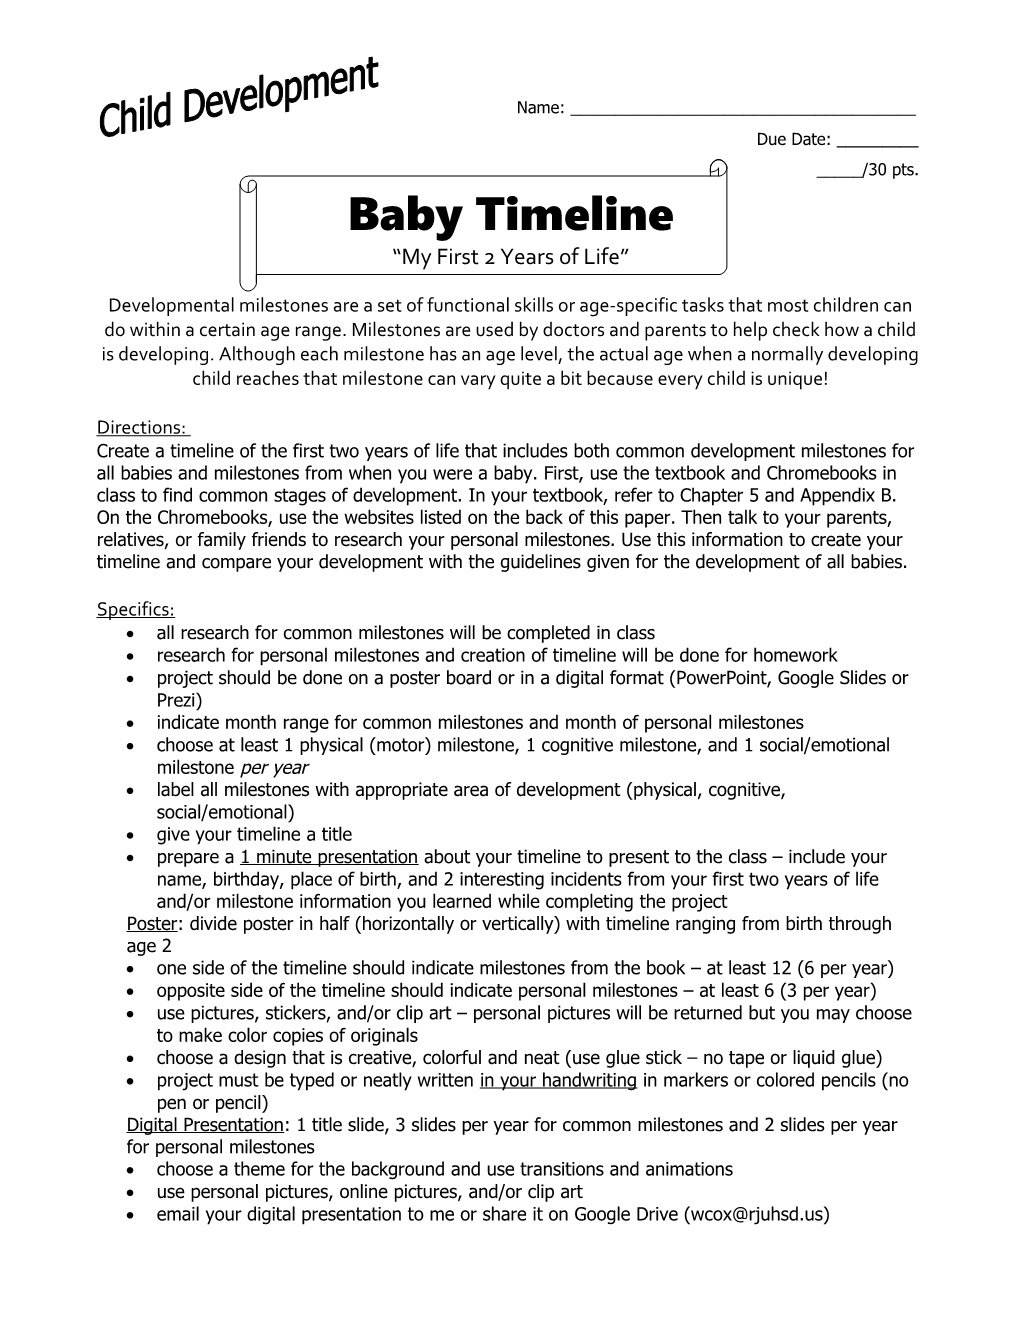 Baby Timeline